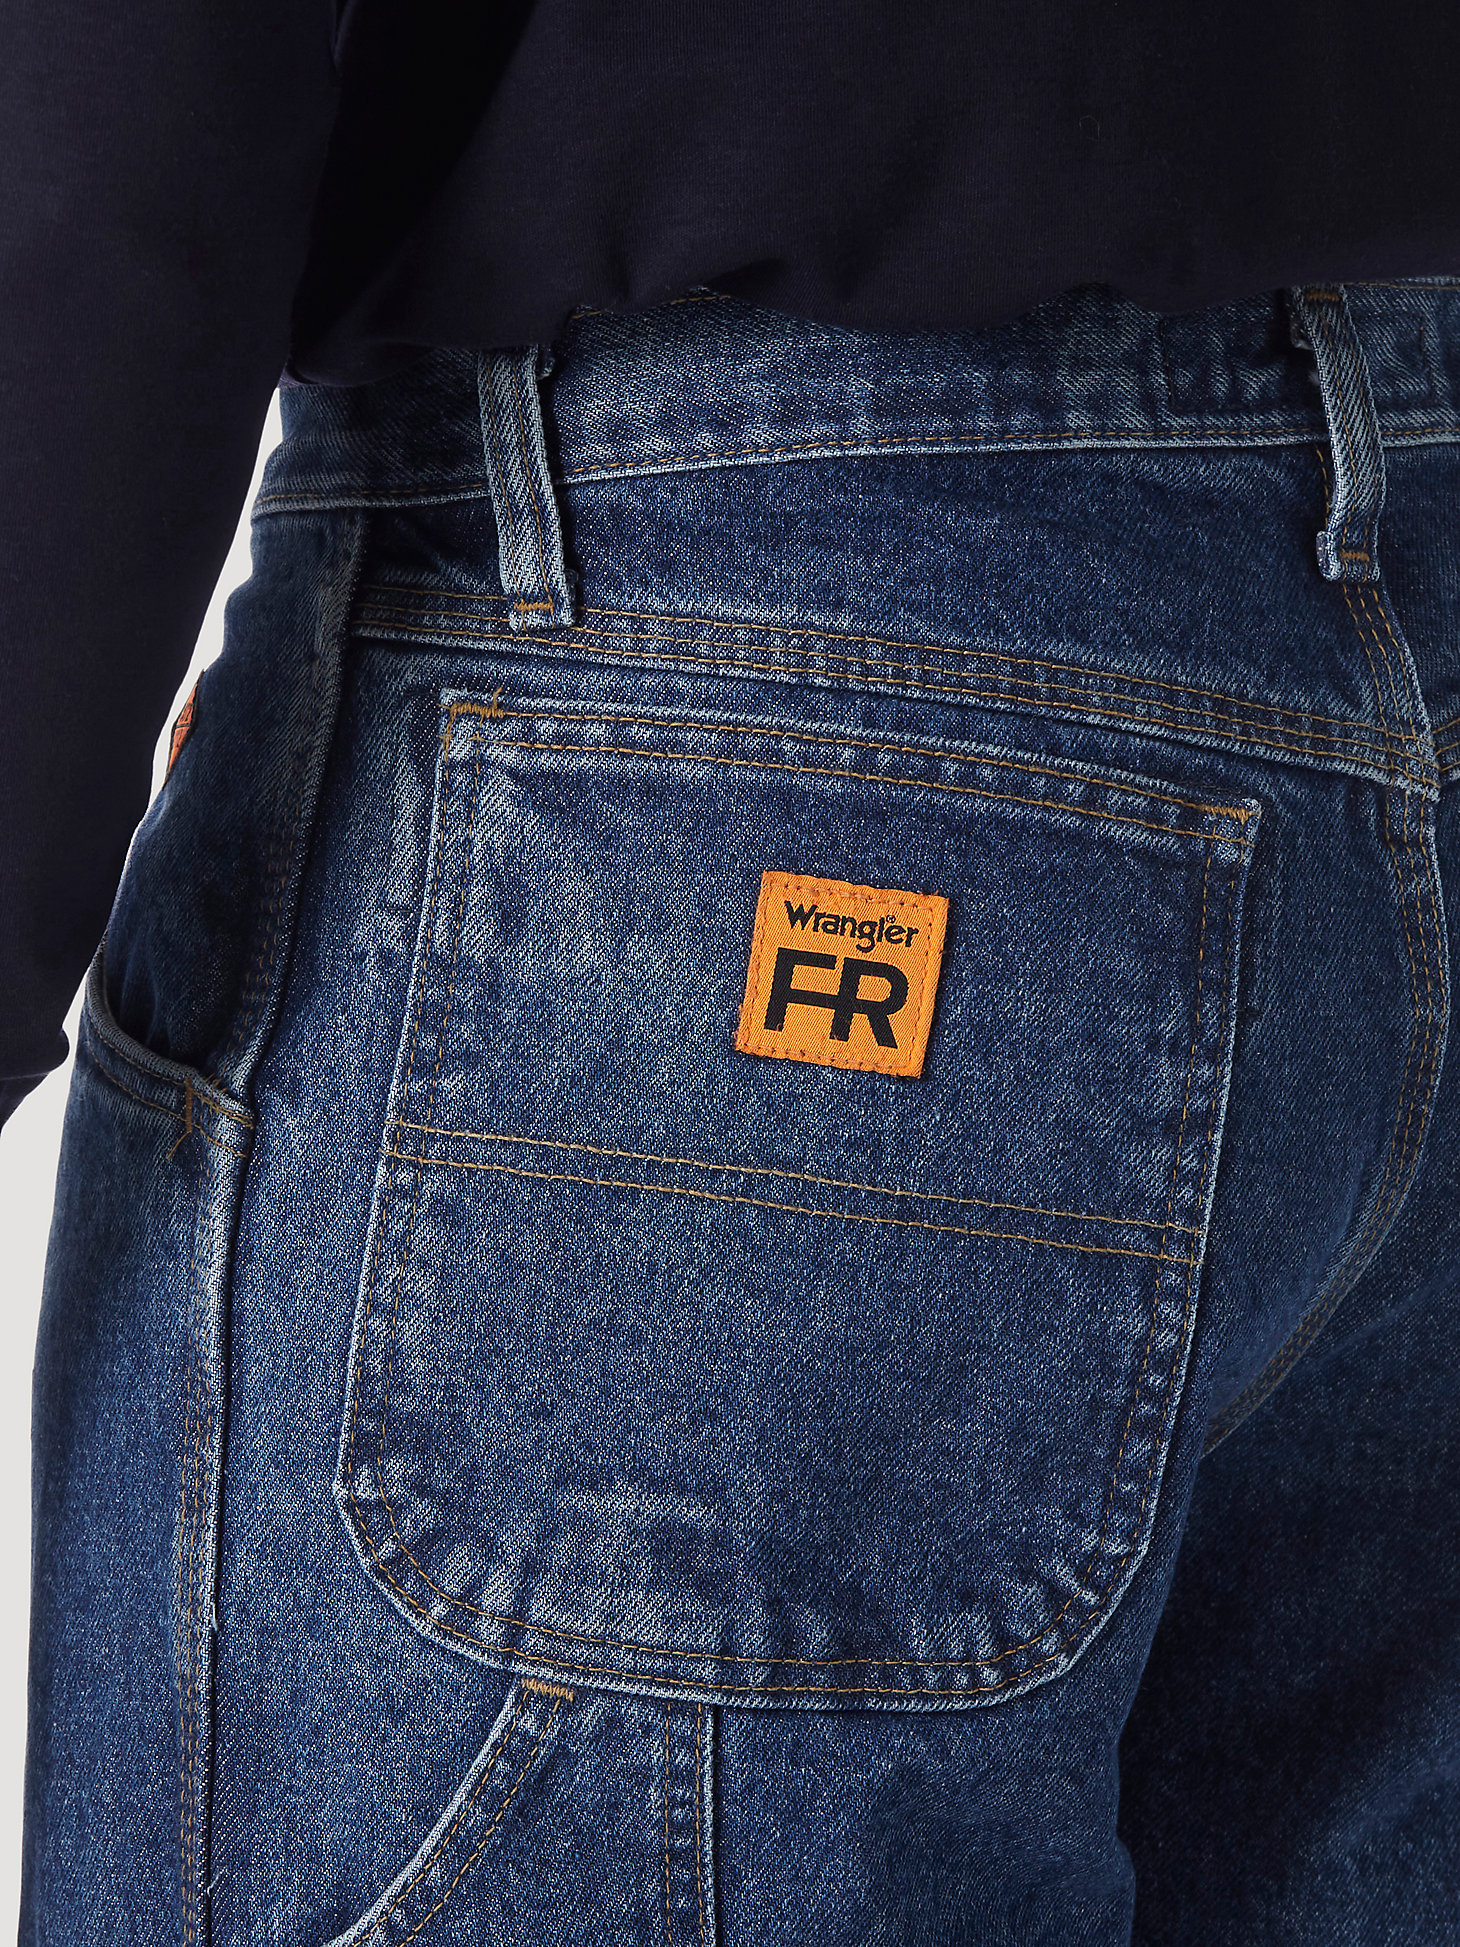 Wrangler® RIGGS Workwear® FR Flame Resistant Carpenter Jean in FIRE RESISTANT alternative view 2